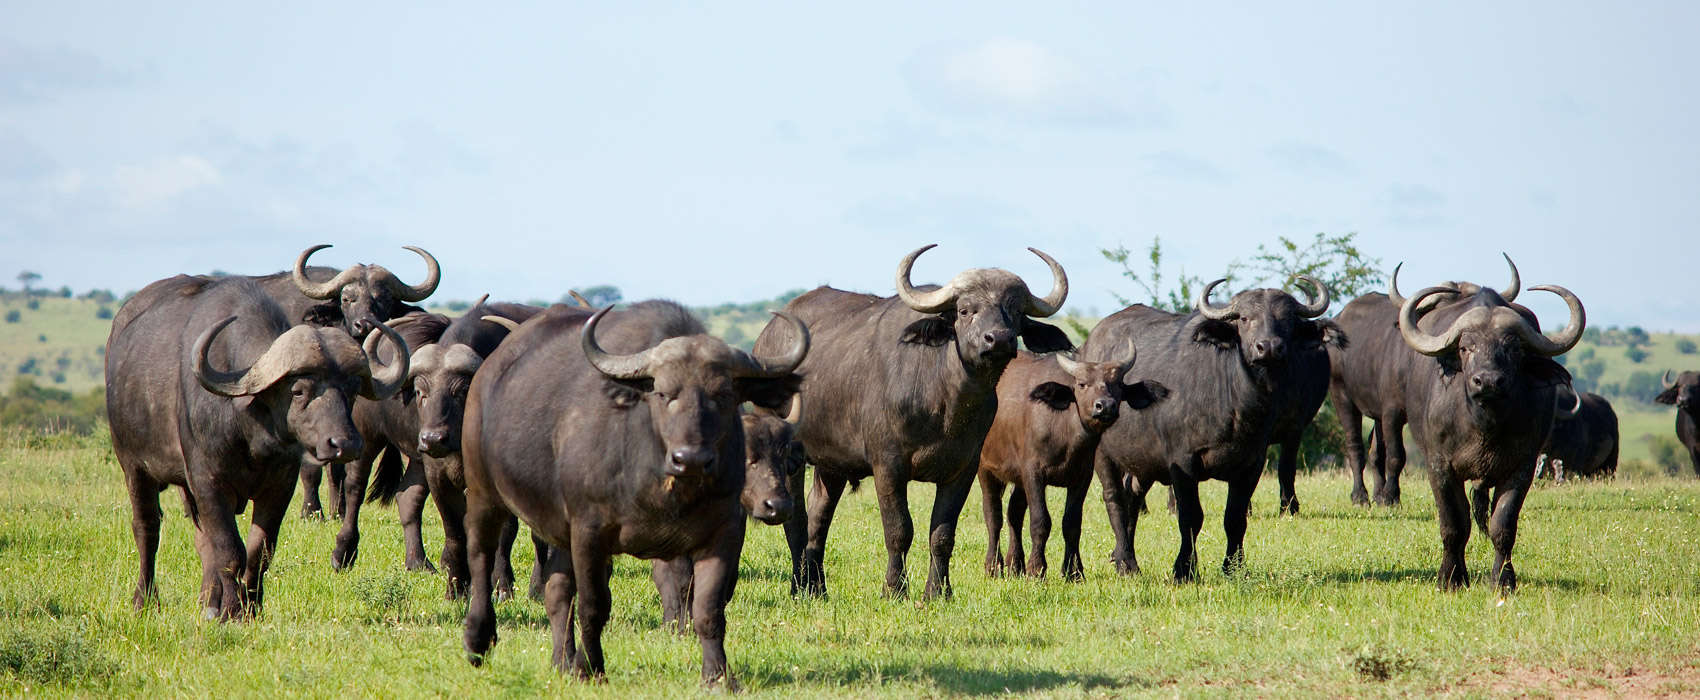 African Serengeti National Park Safari buffalo